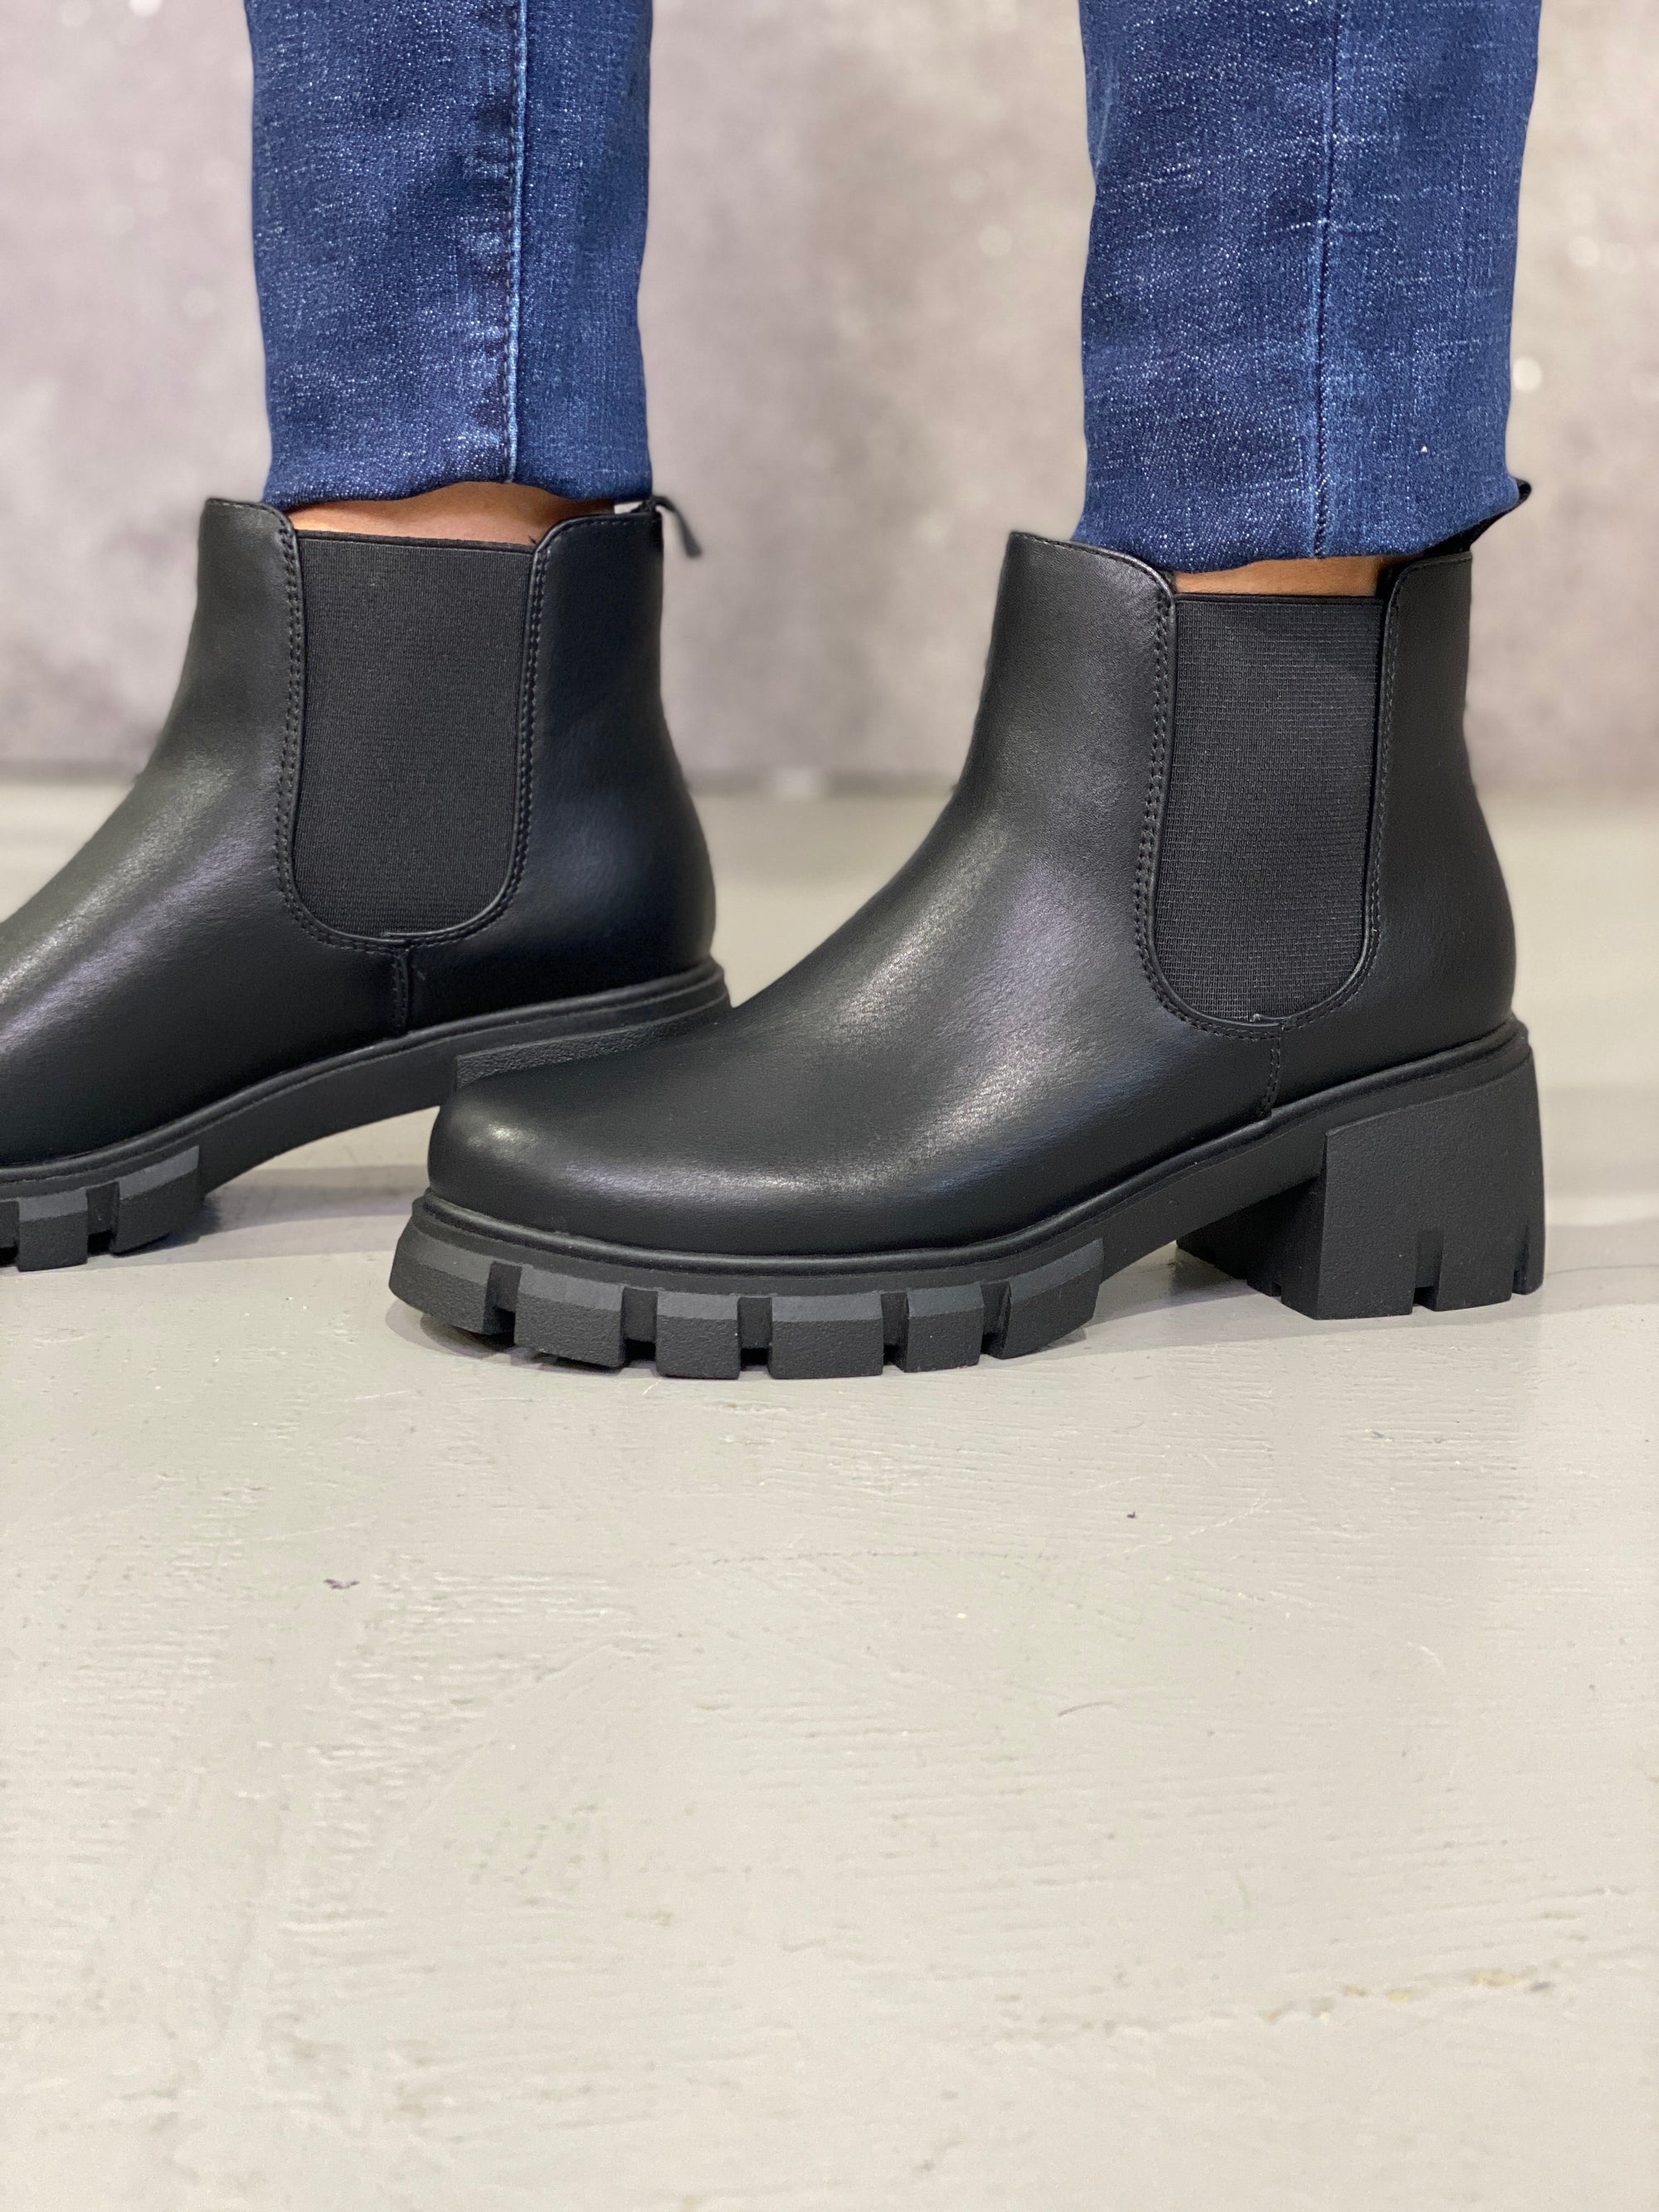 Chunky Heel Boot - Black - SIZE 6 left